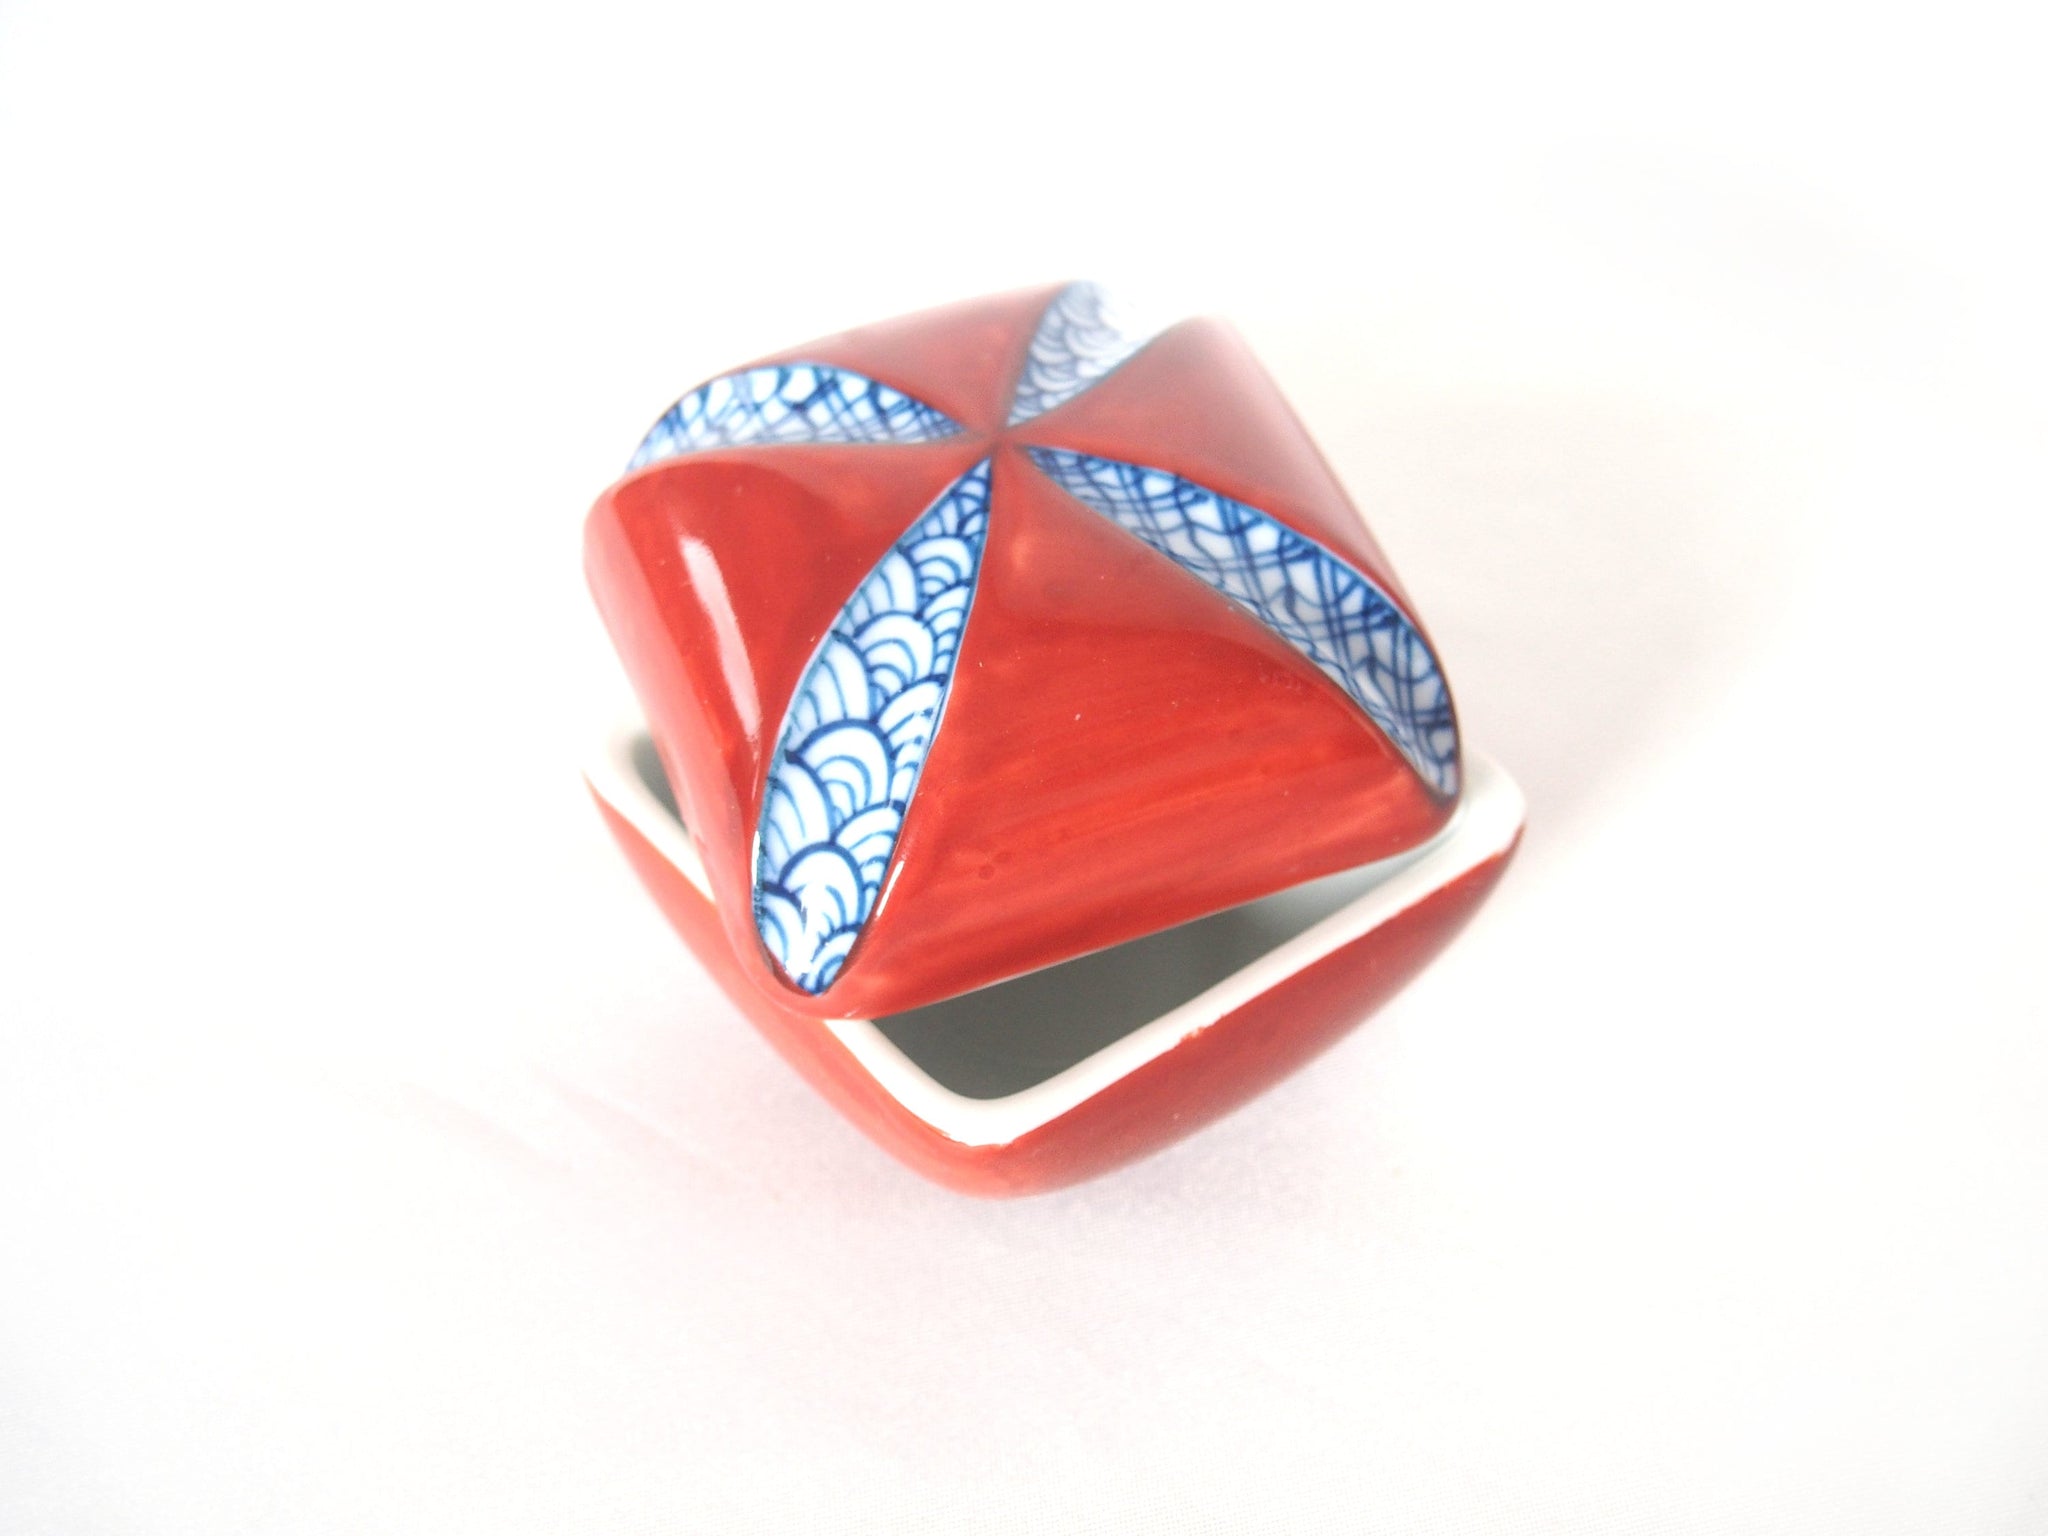 Small Japanese ceramic box - square red with indigo pattern